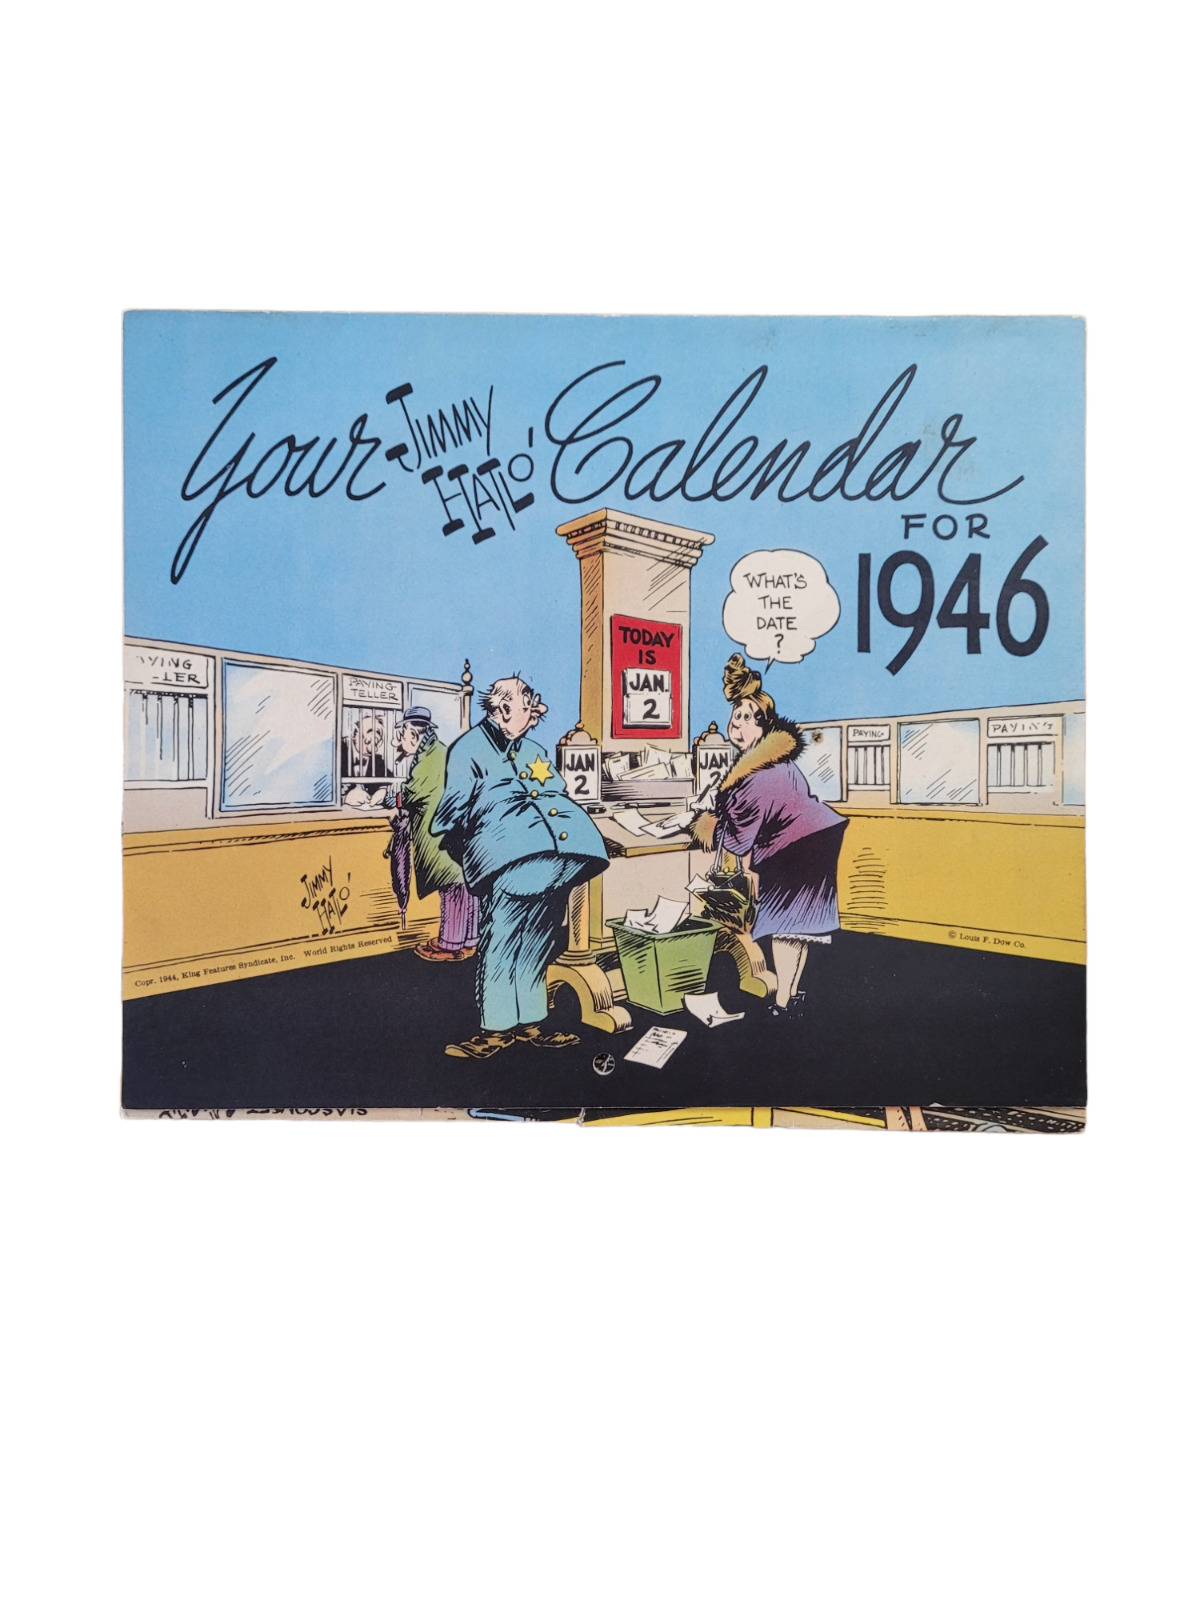 Vintage - Rare - Hard To Find - Original Jimmy Hatlo Wall Calendar For 1946